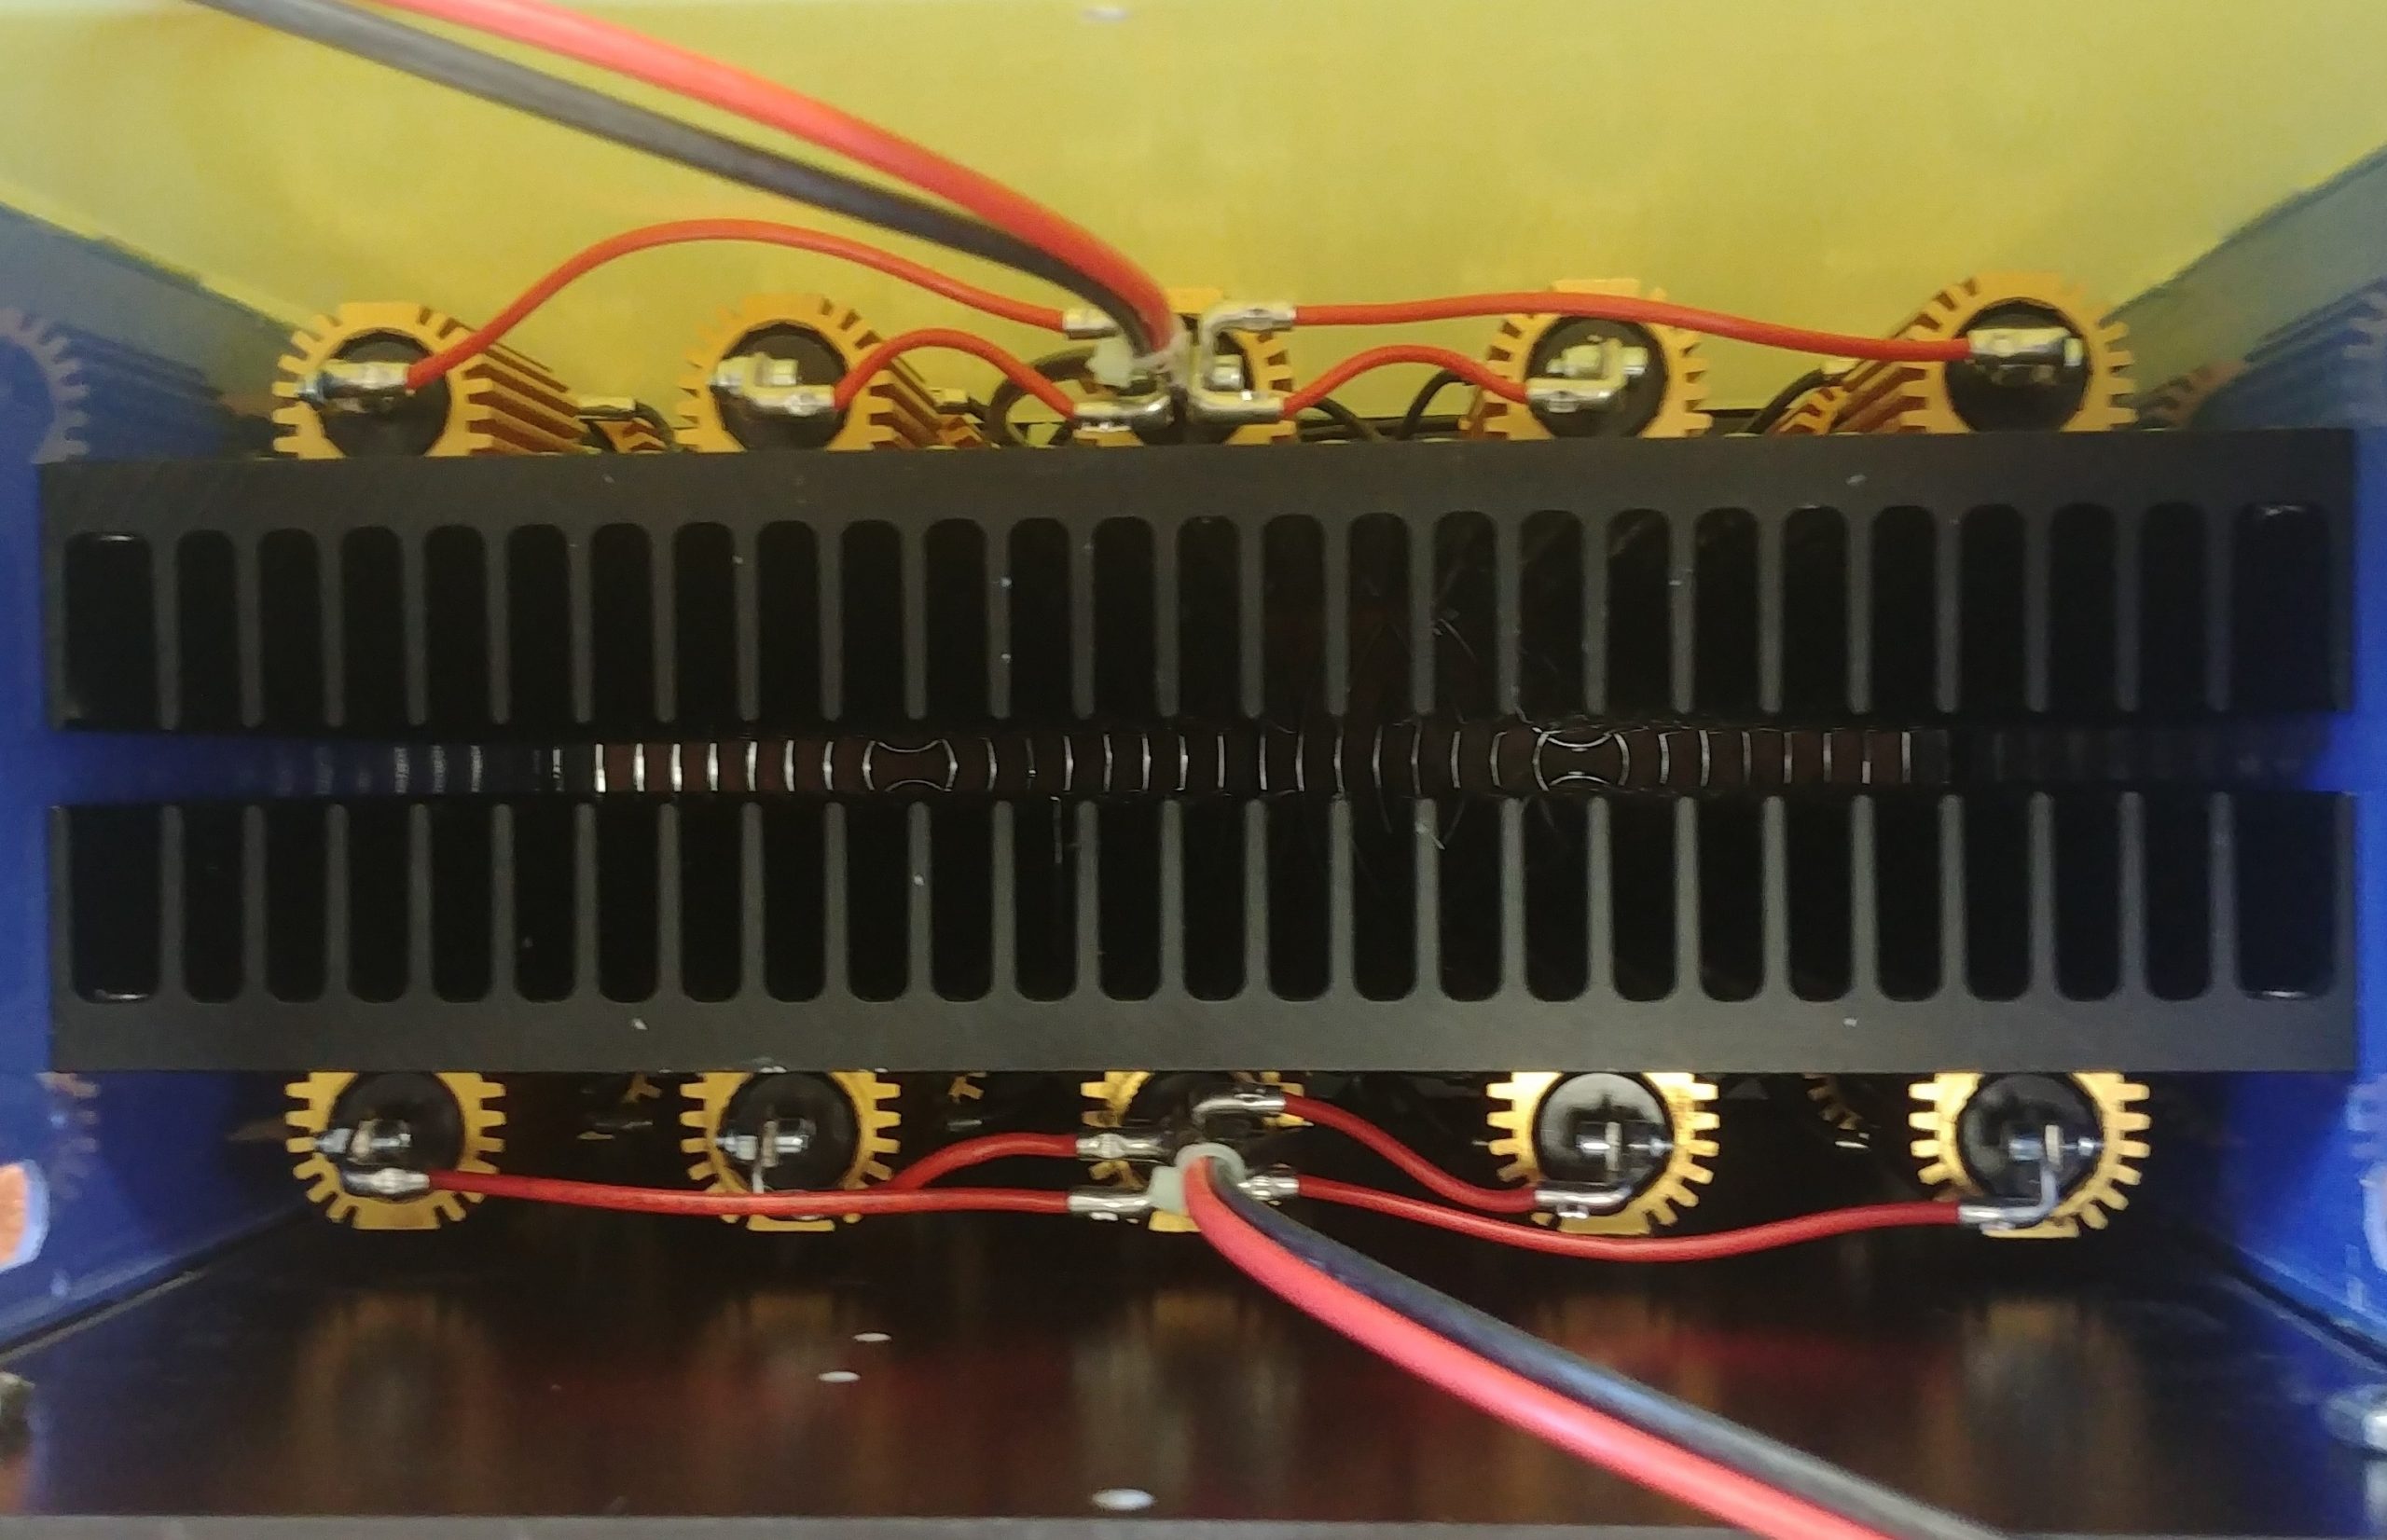 Battery Measurement with Resistors